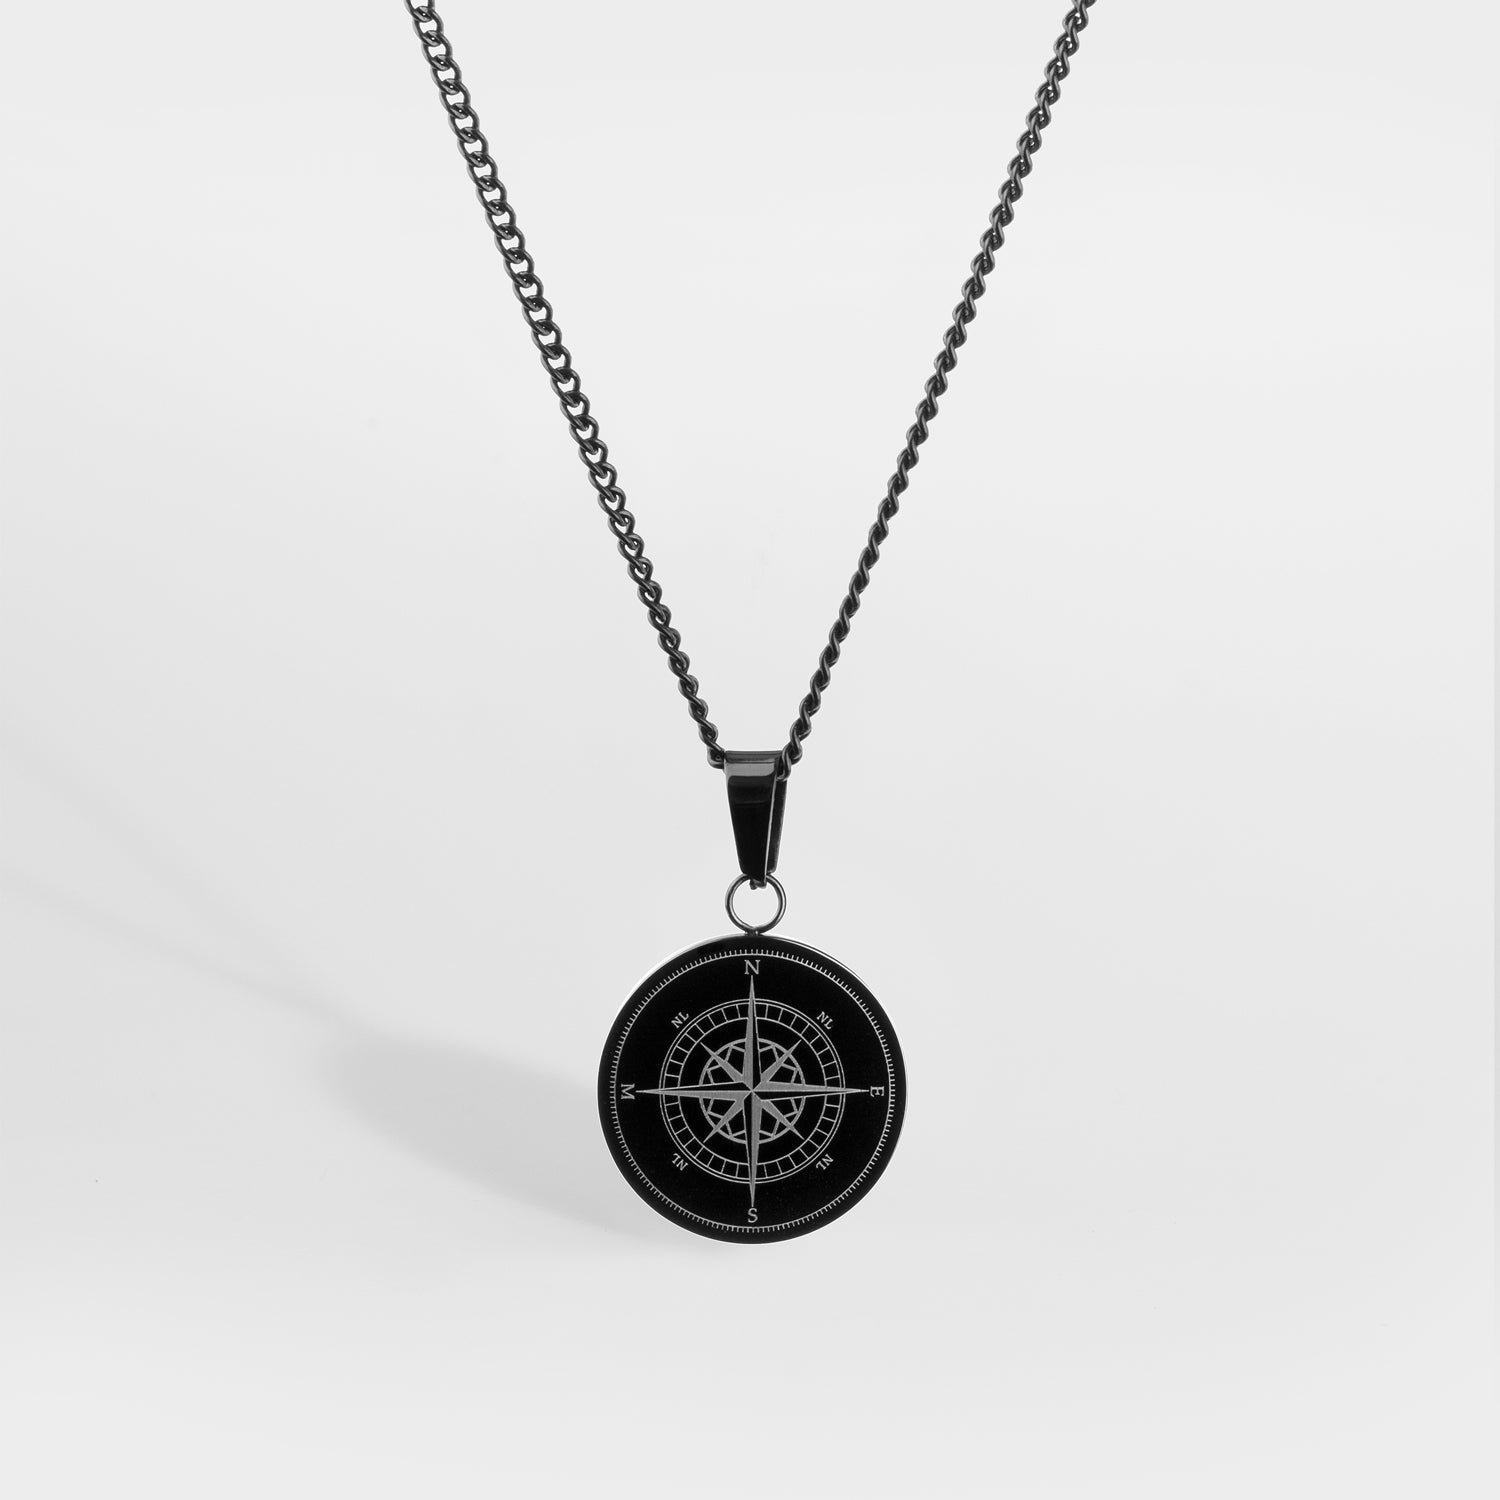 NL Compass pendant - Black